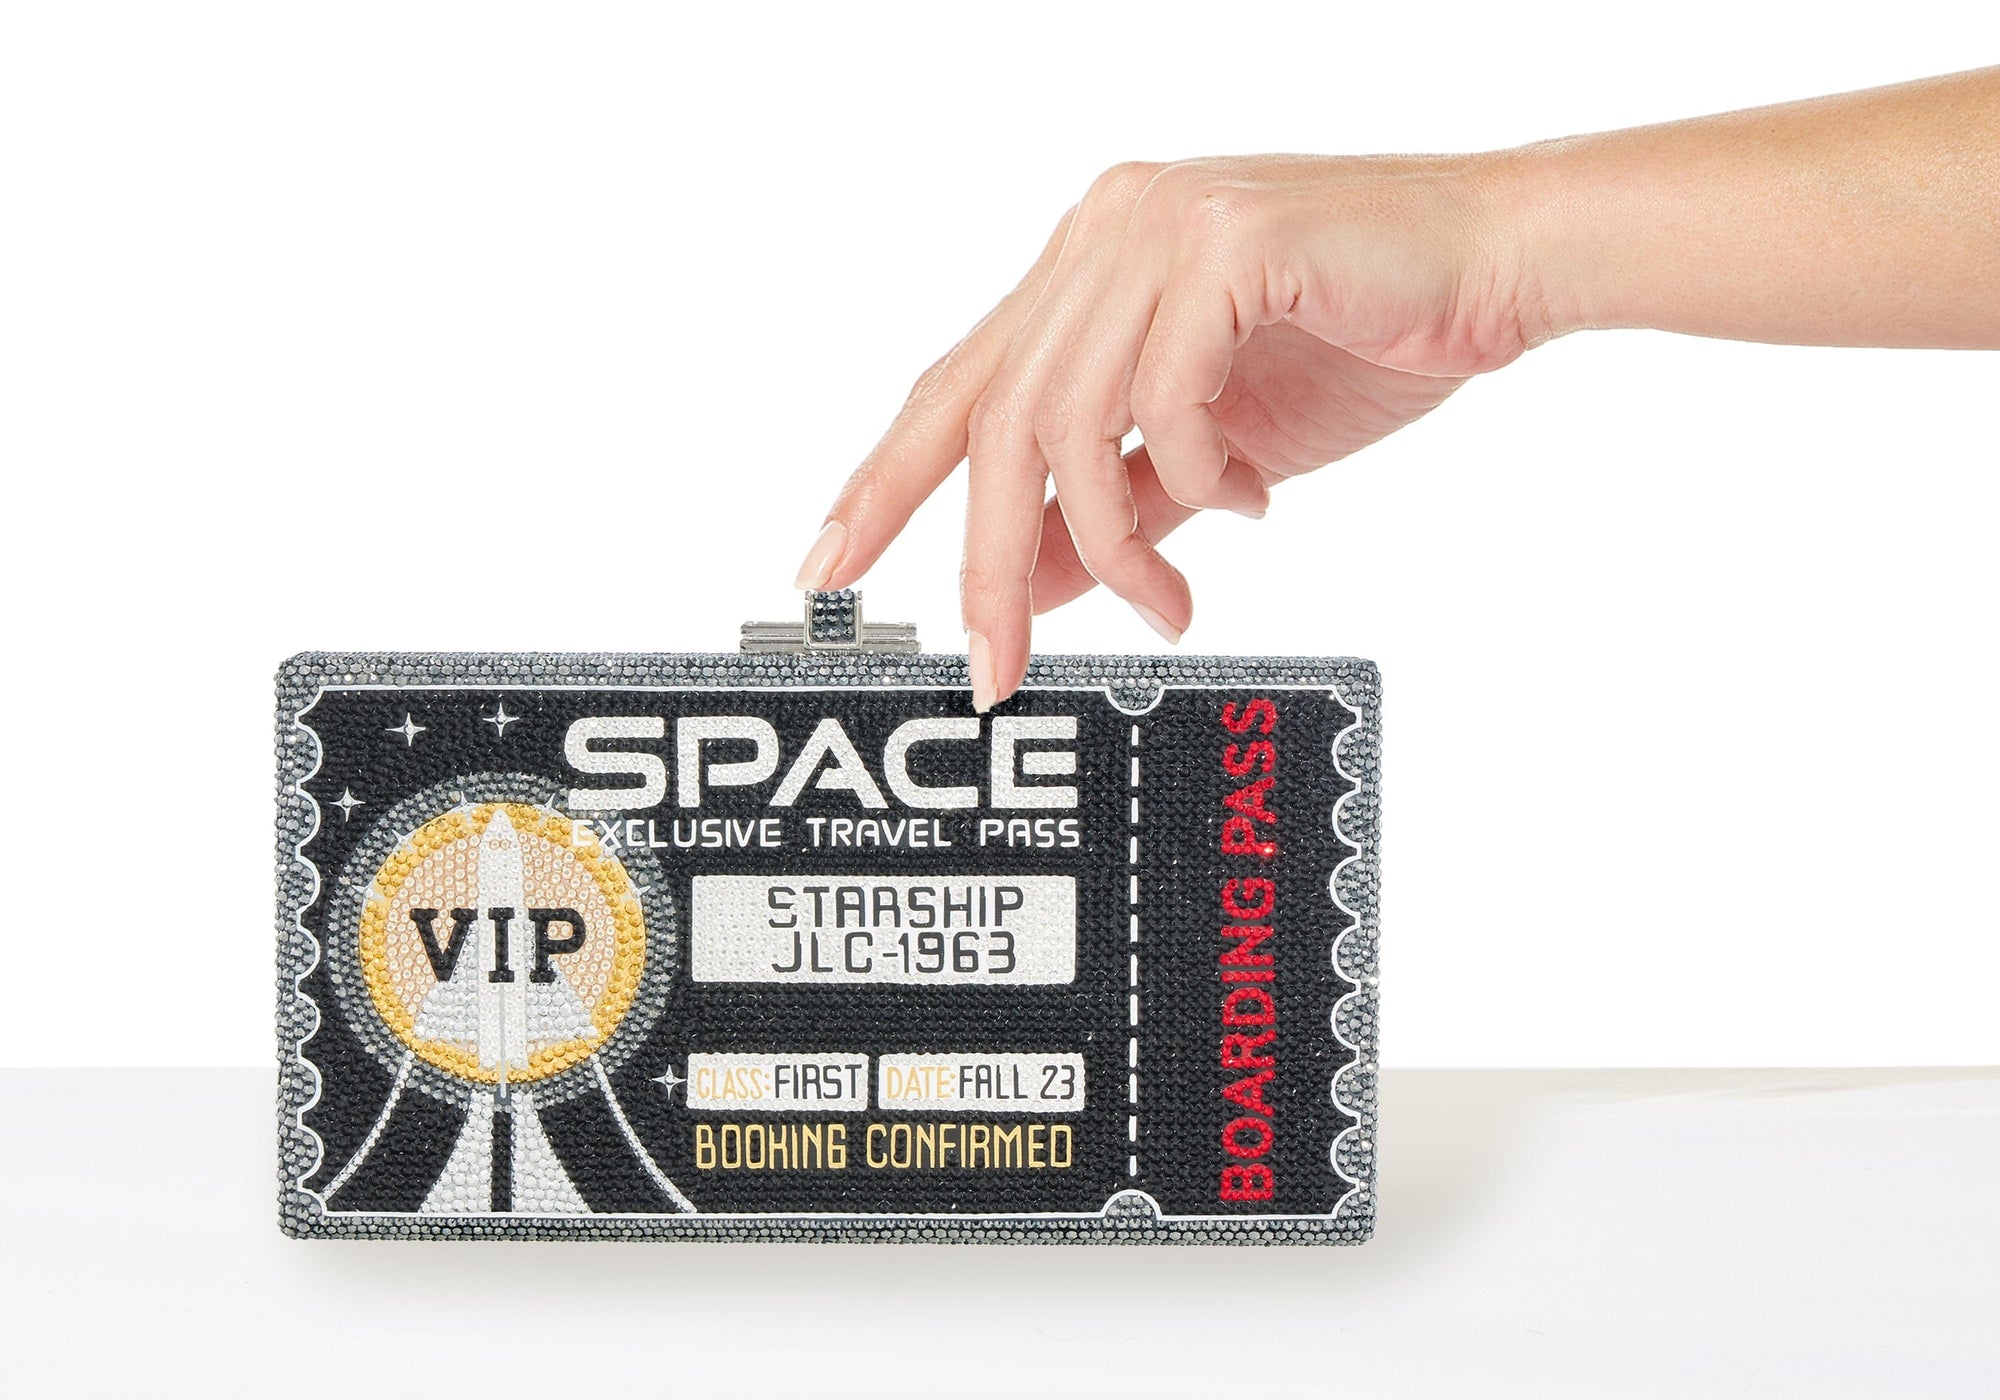 Sleek Rectangle Space Ticket